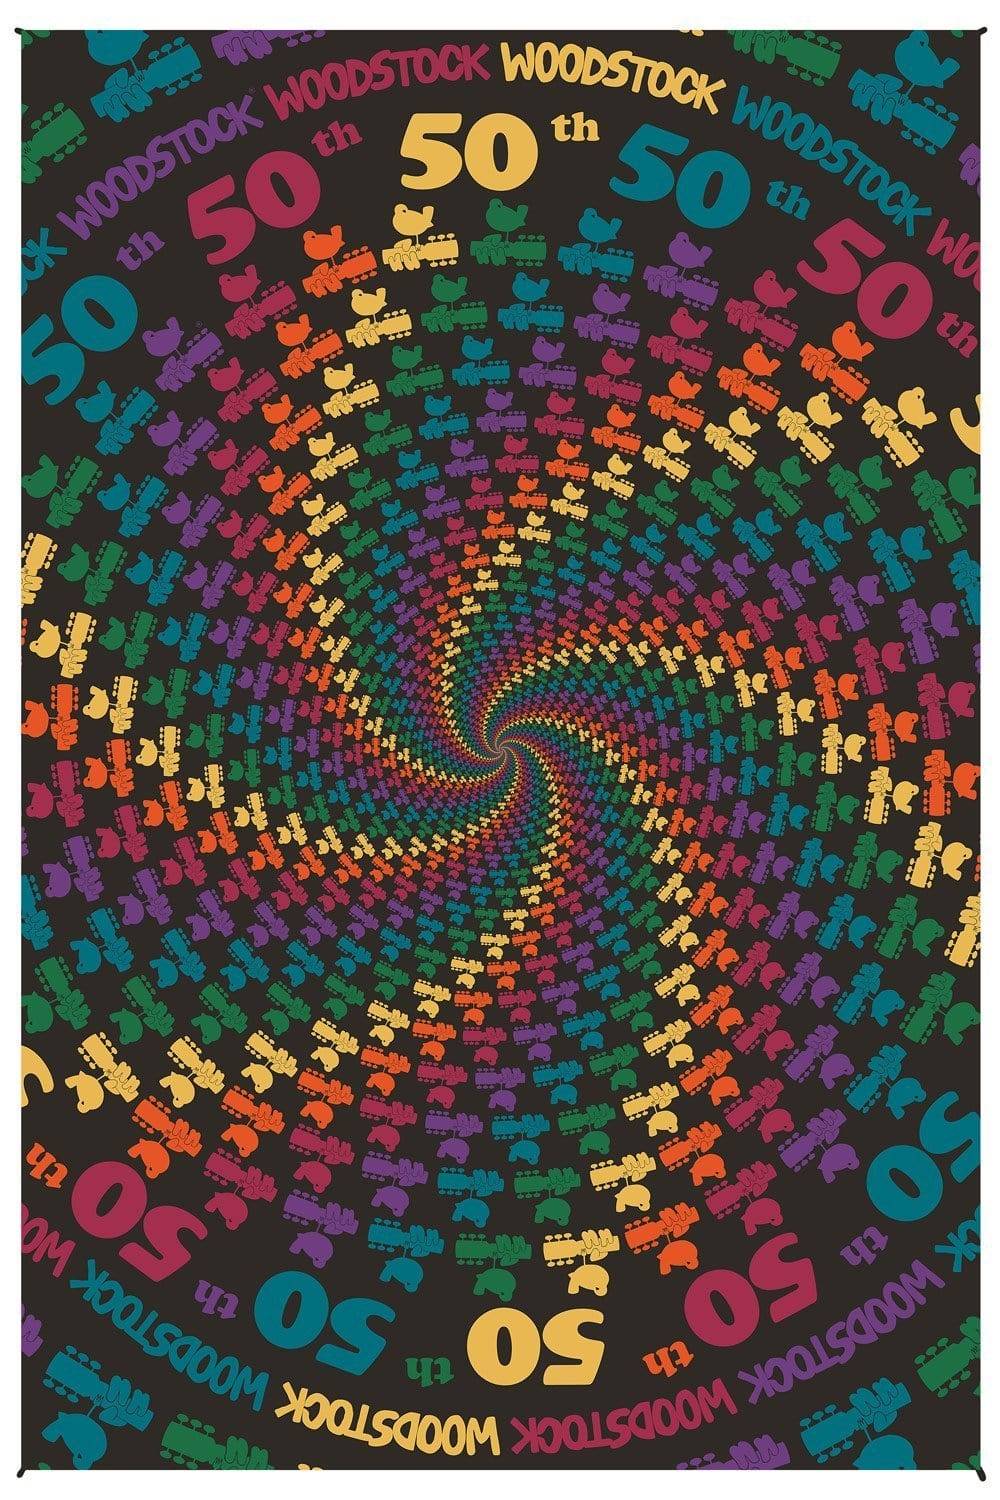 3D Woodstock 50th Sprial Tapestry - HalfMoonMusic